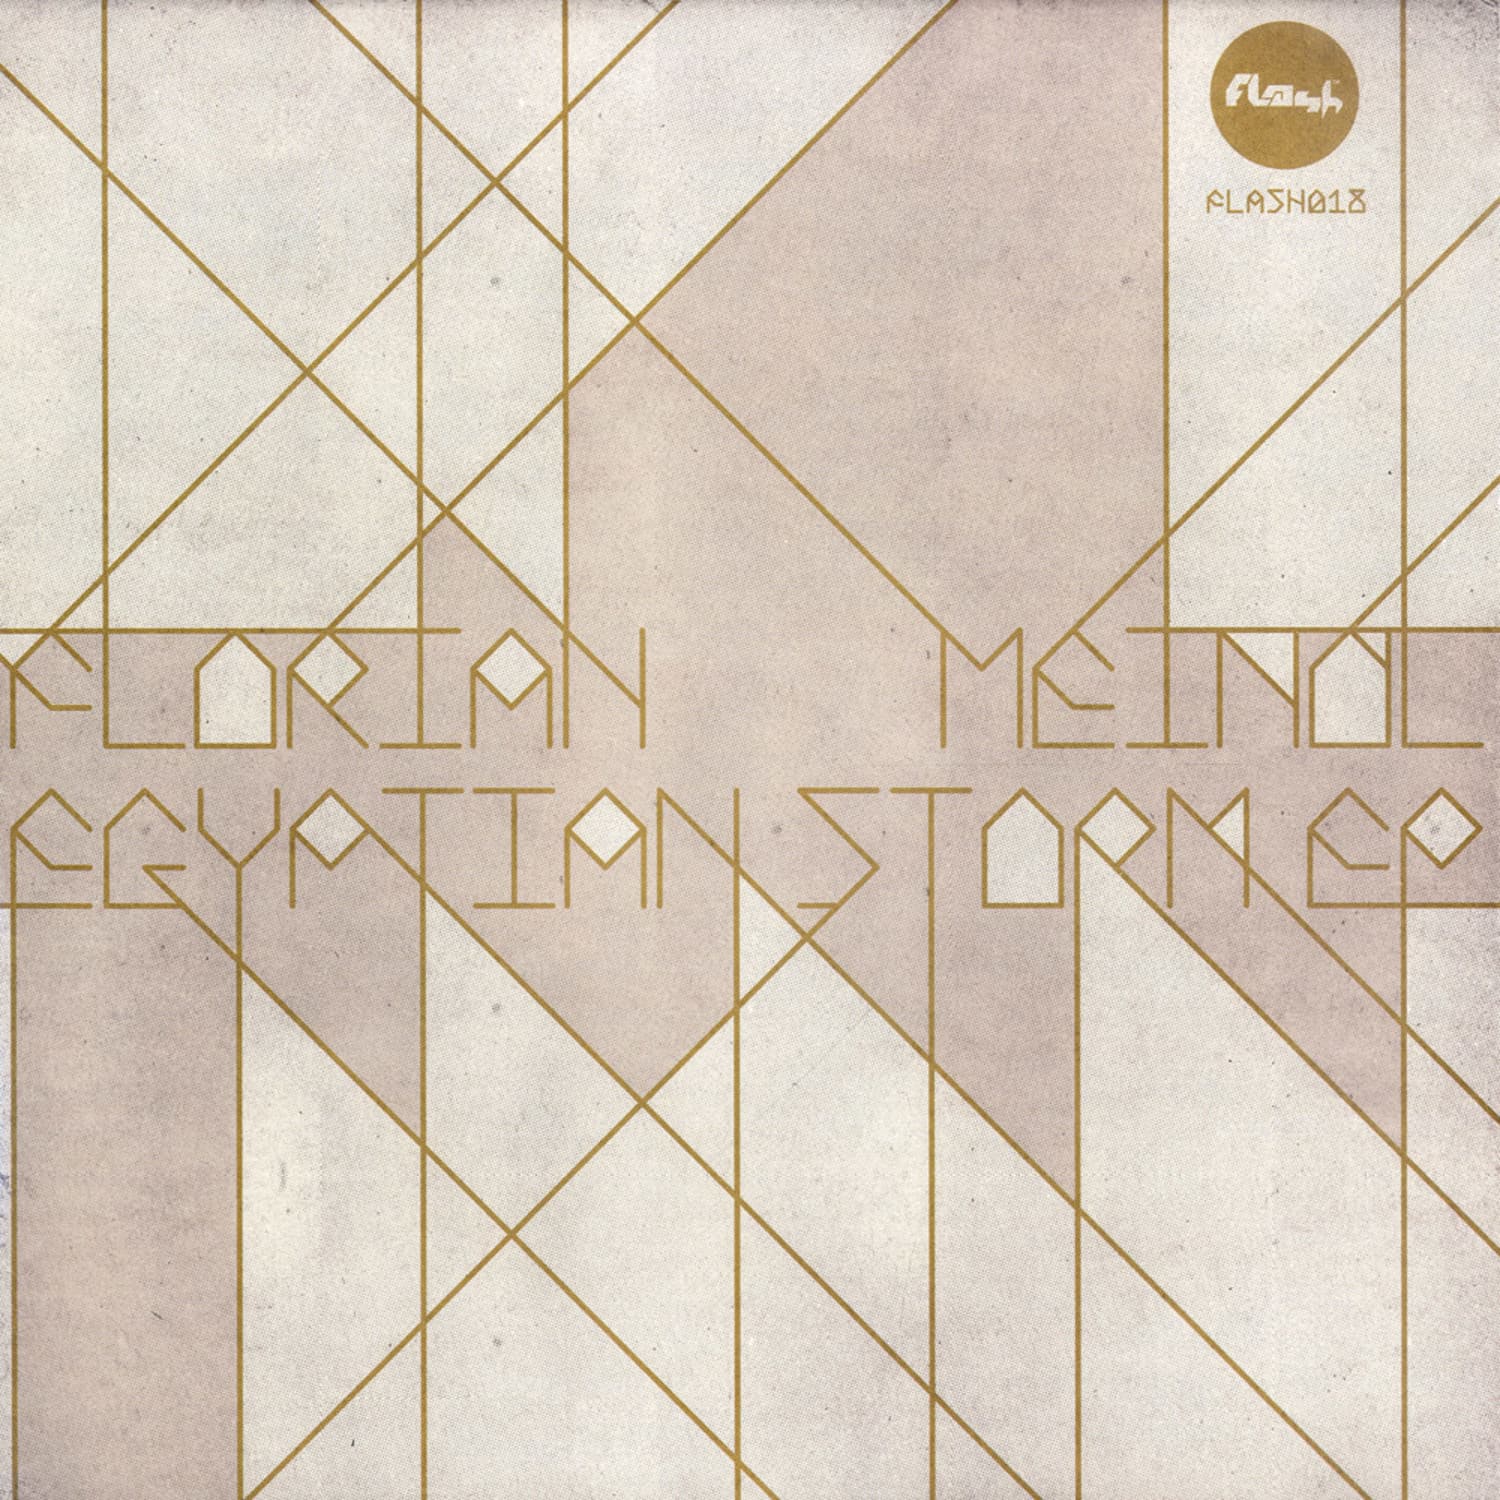 Florian Meindl - EGYPTIAN STORM EP